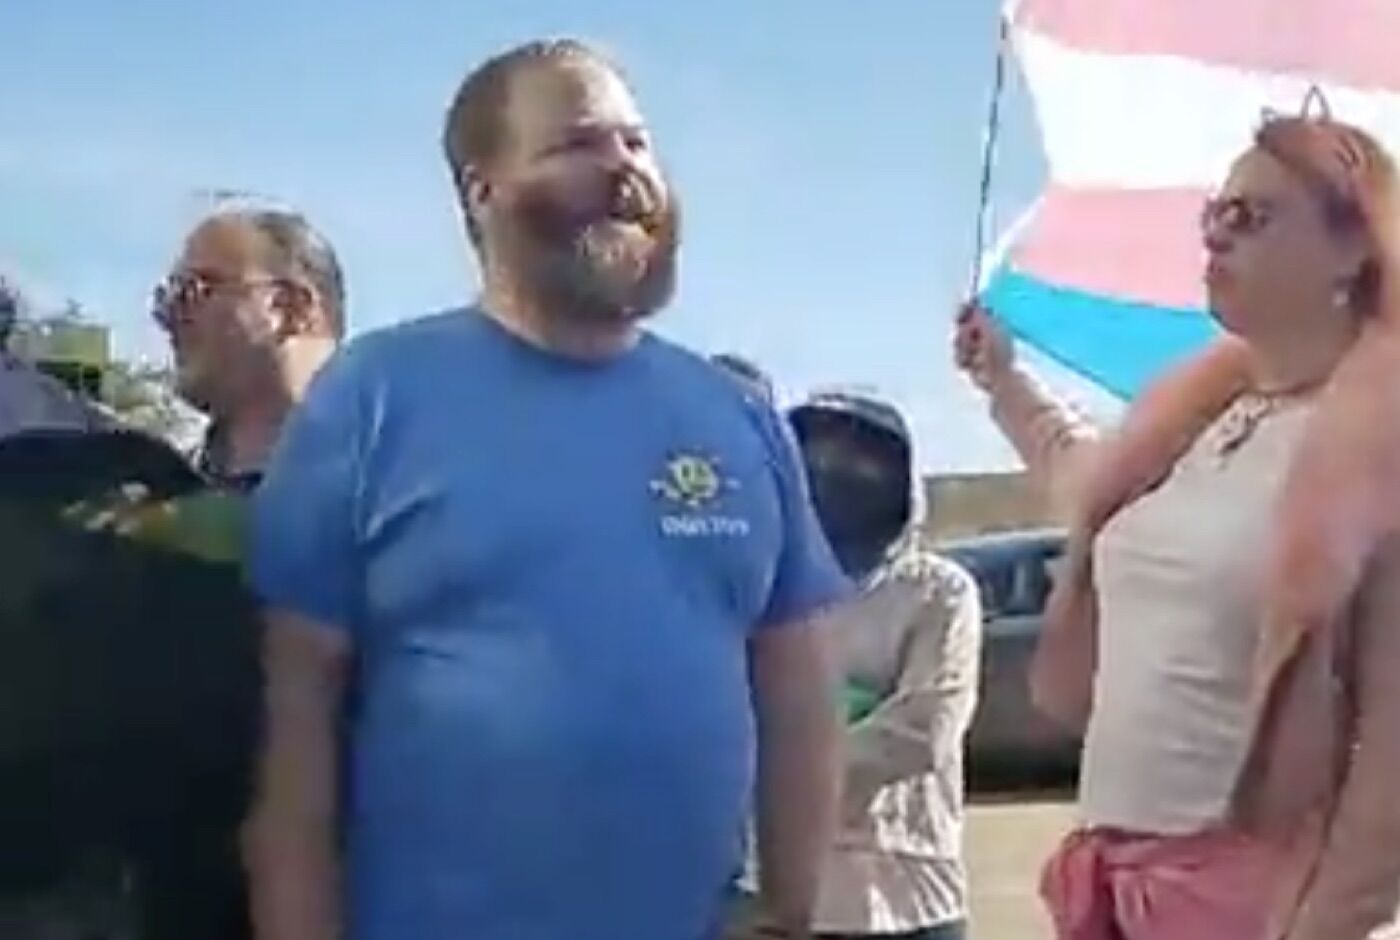 A member of Super Happy Fun America at the Dallas Straight Pride event. The "parade" drew 4 people.